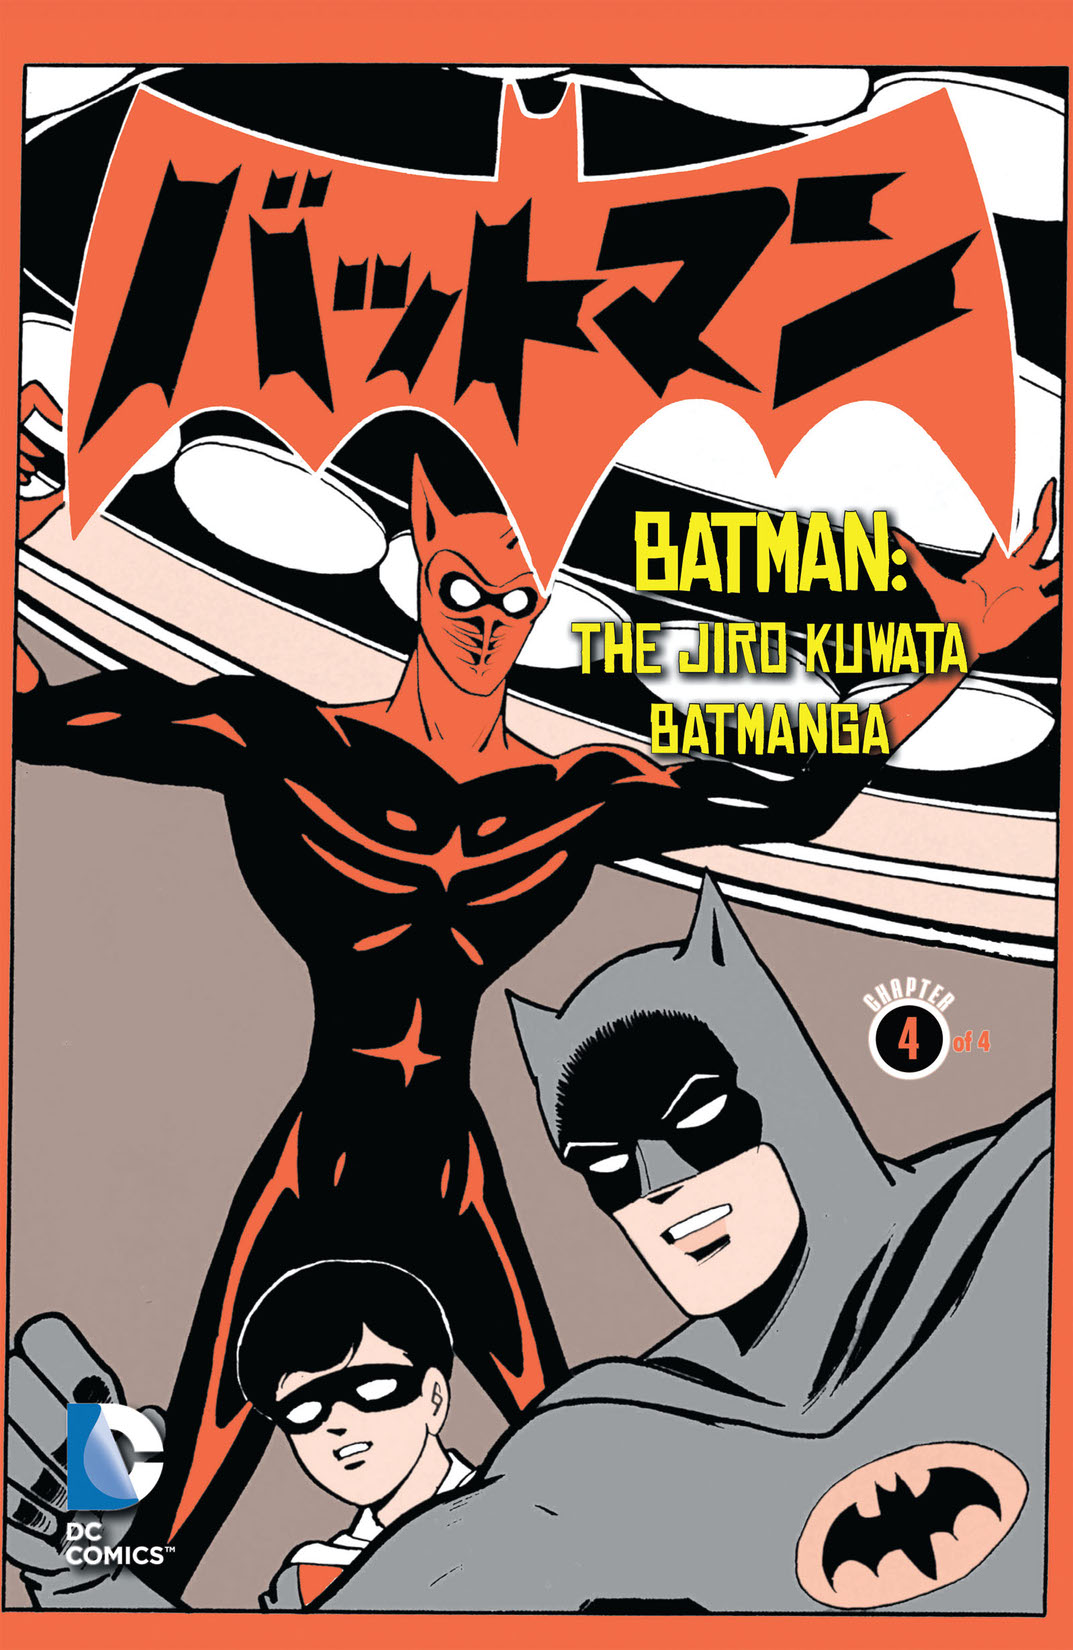 Batman: The Jiro Kuwata Batmanga #19 preview images